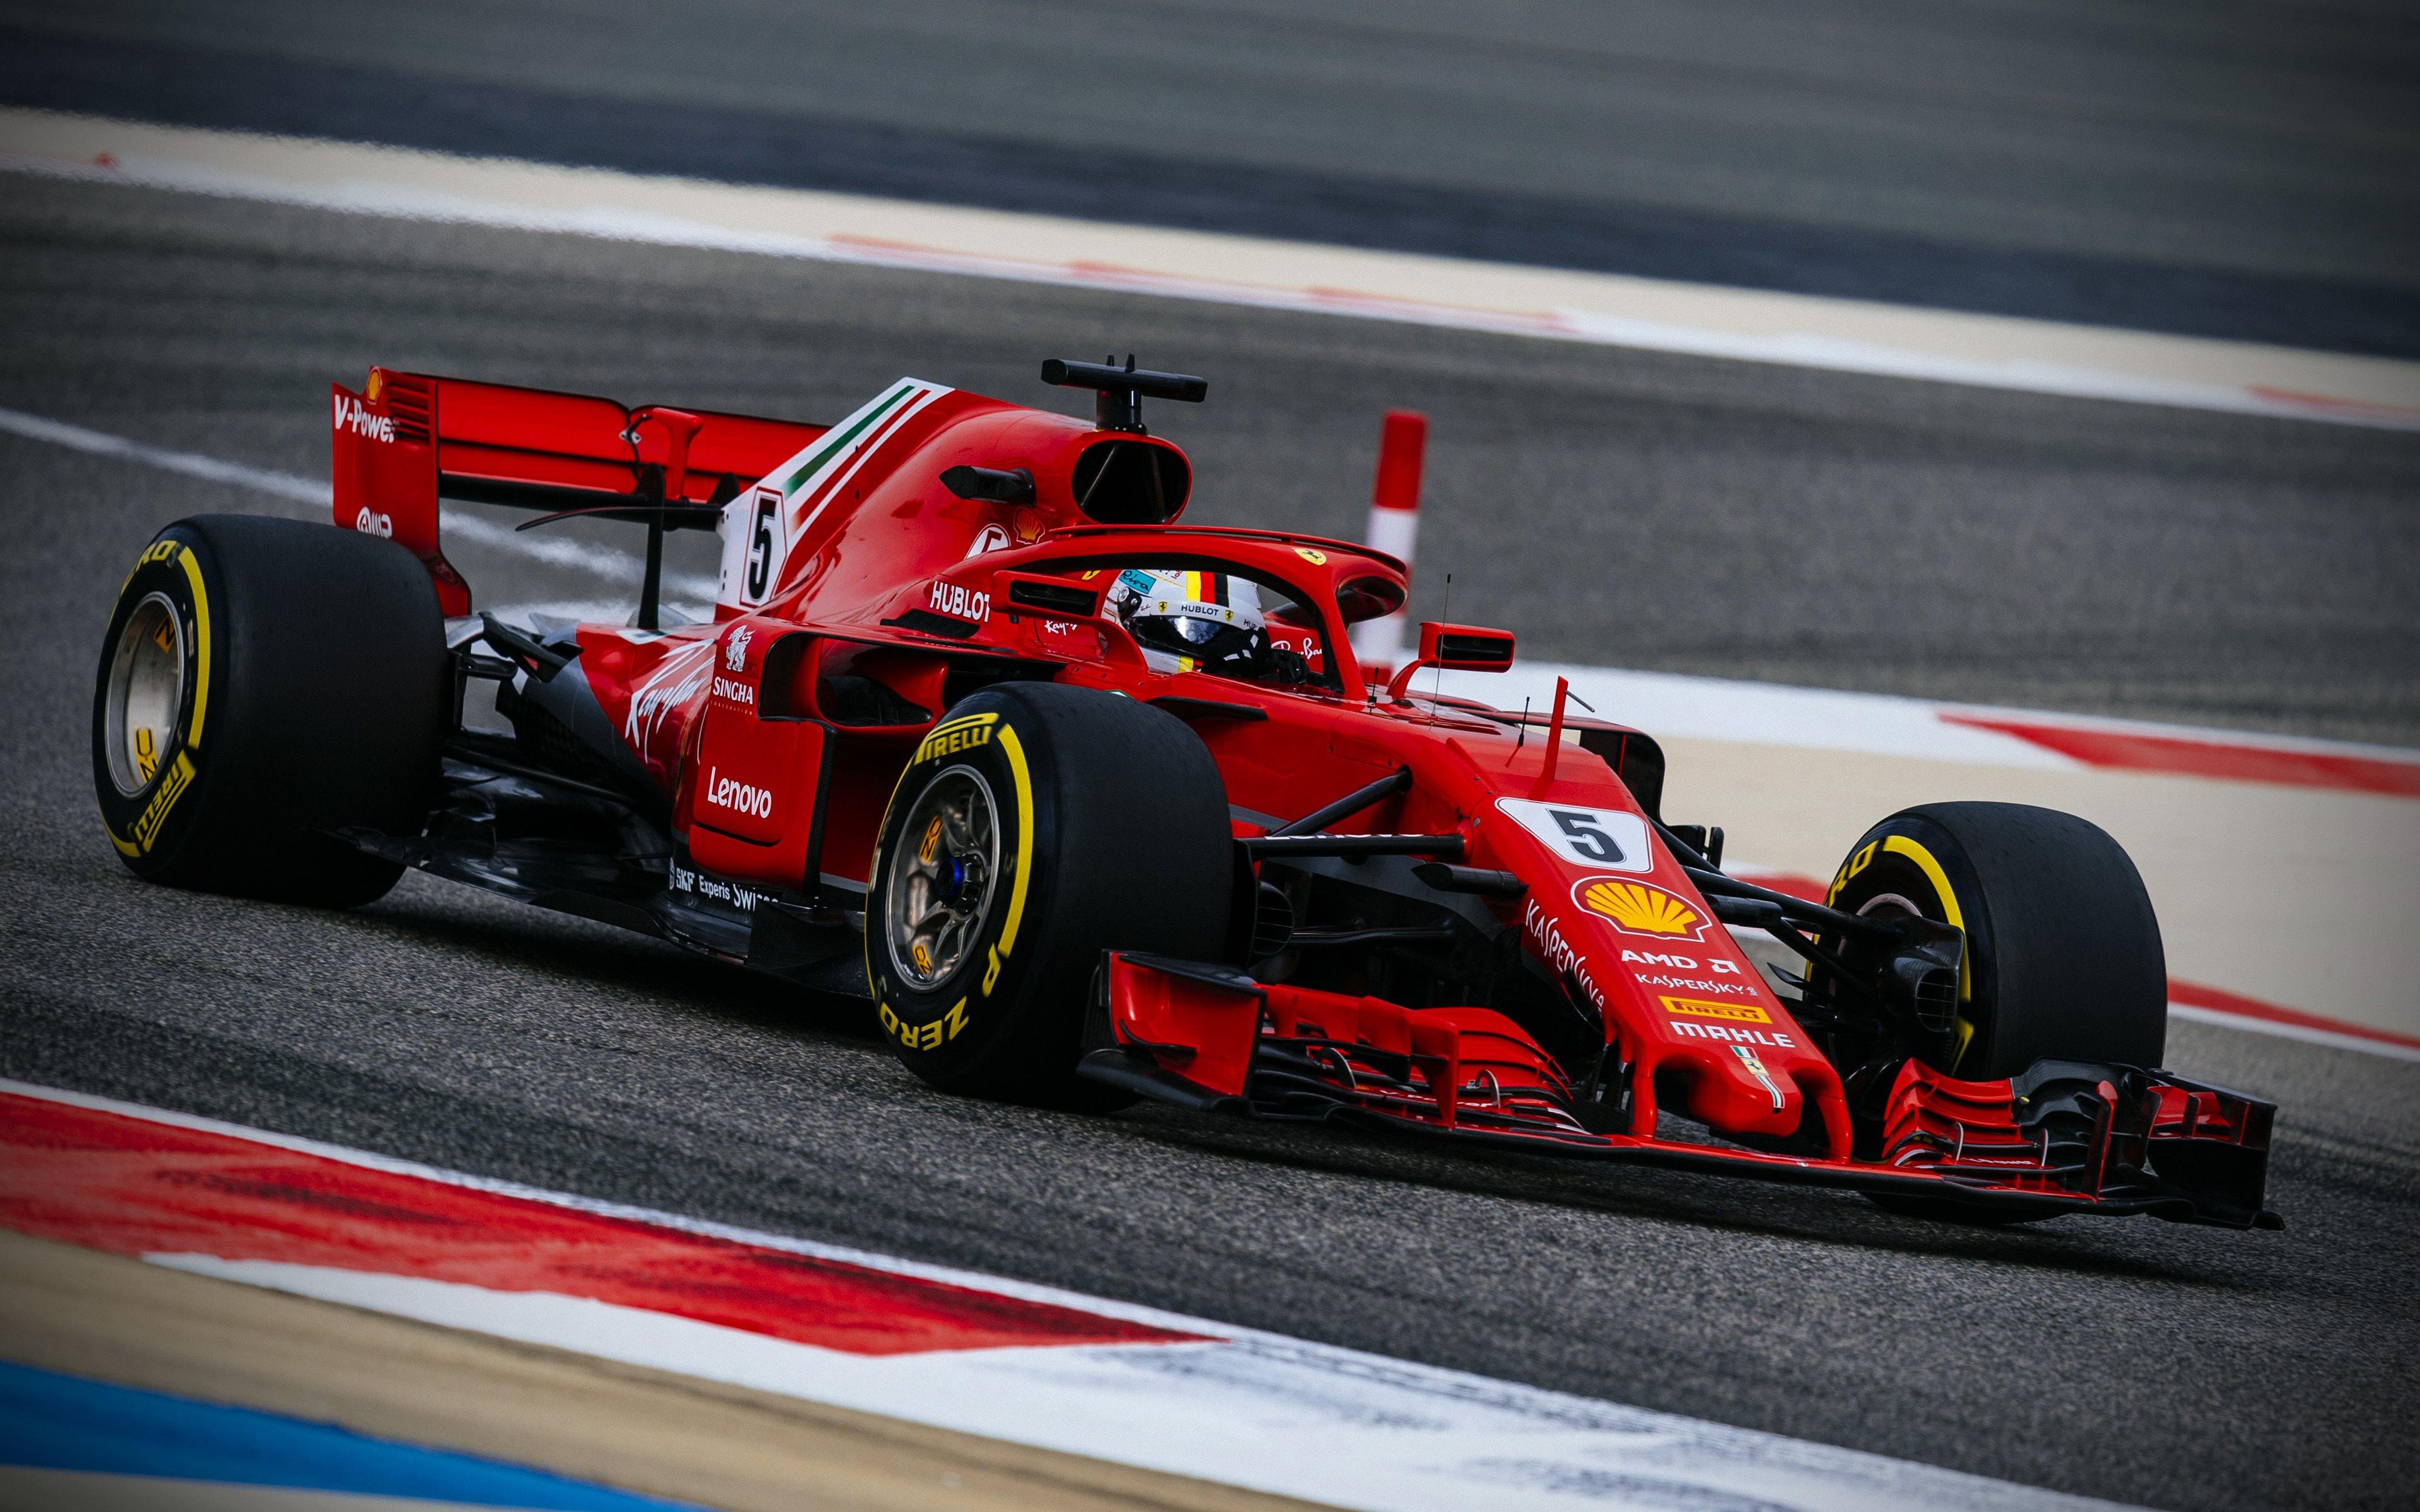 Download wallpapers Scuderia Ferrari, 4k, Vettel, motion